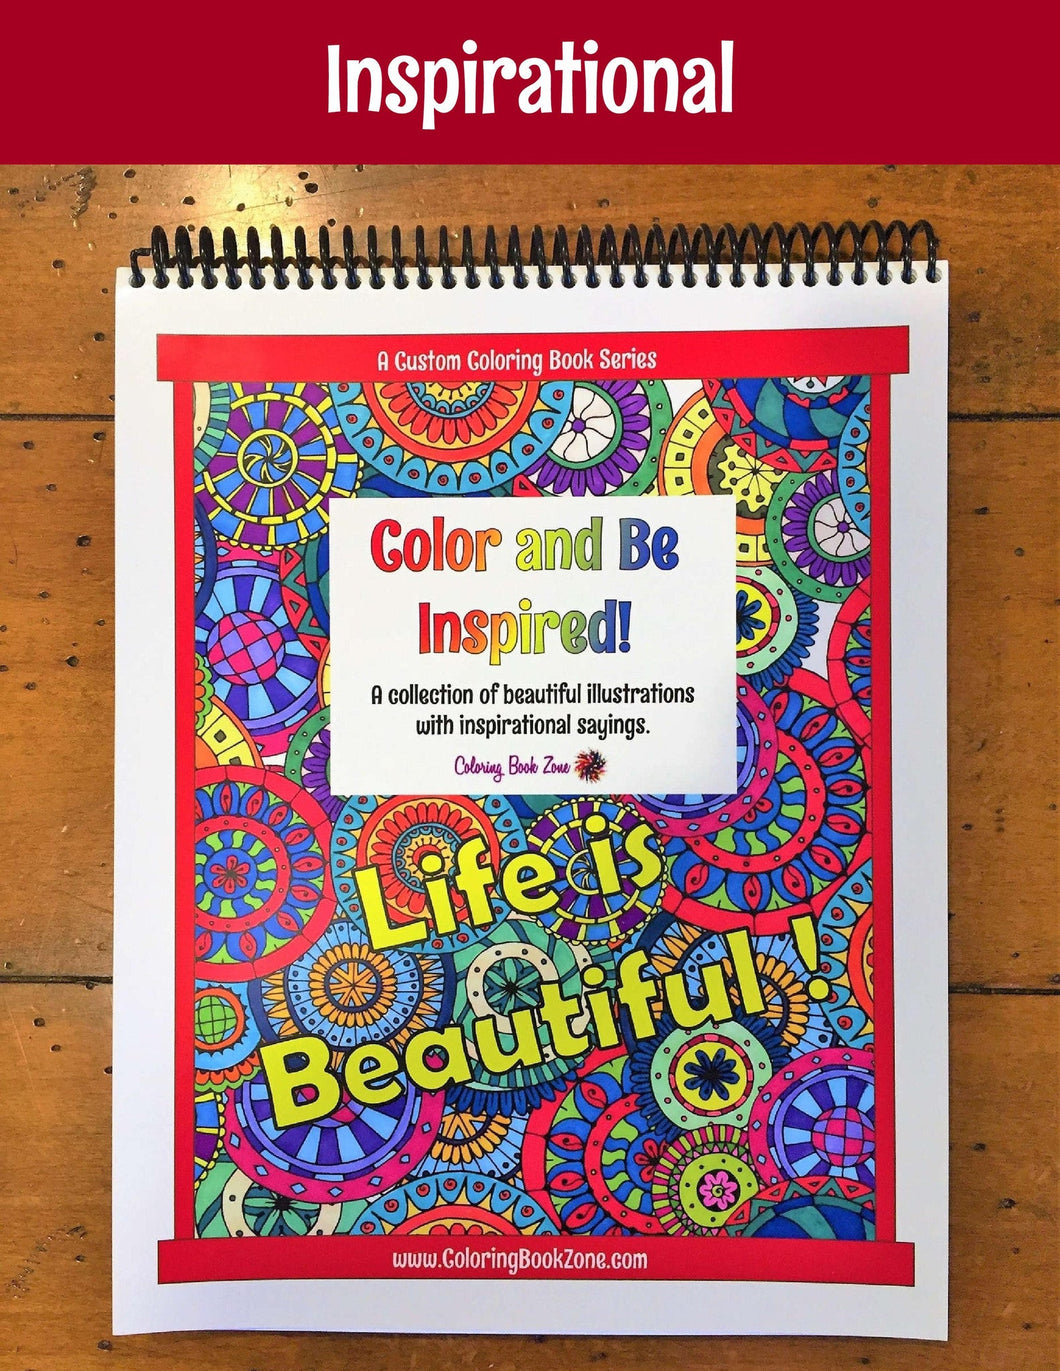 Colors Live - Bonzi Buddy by Author